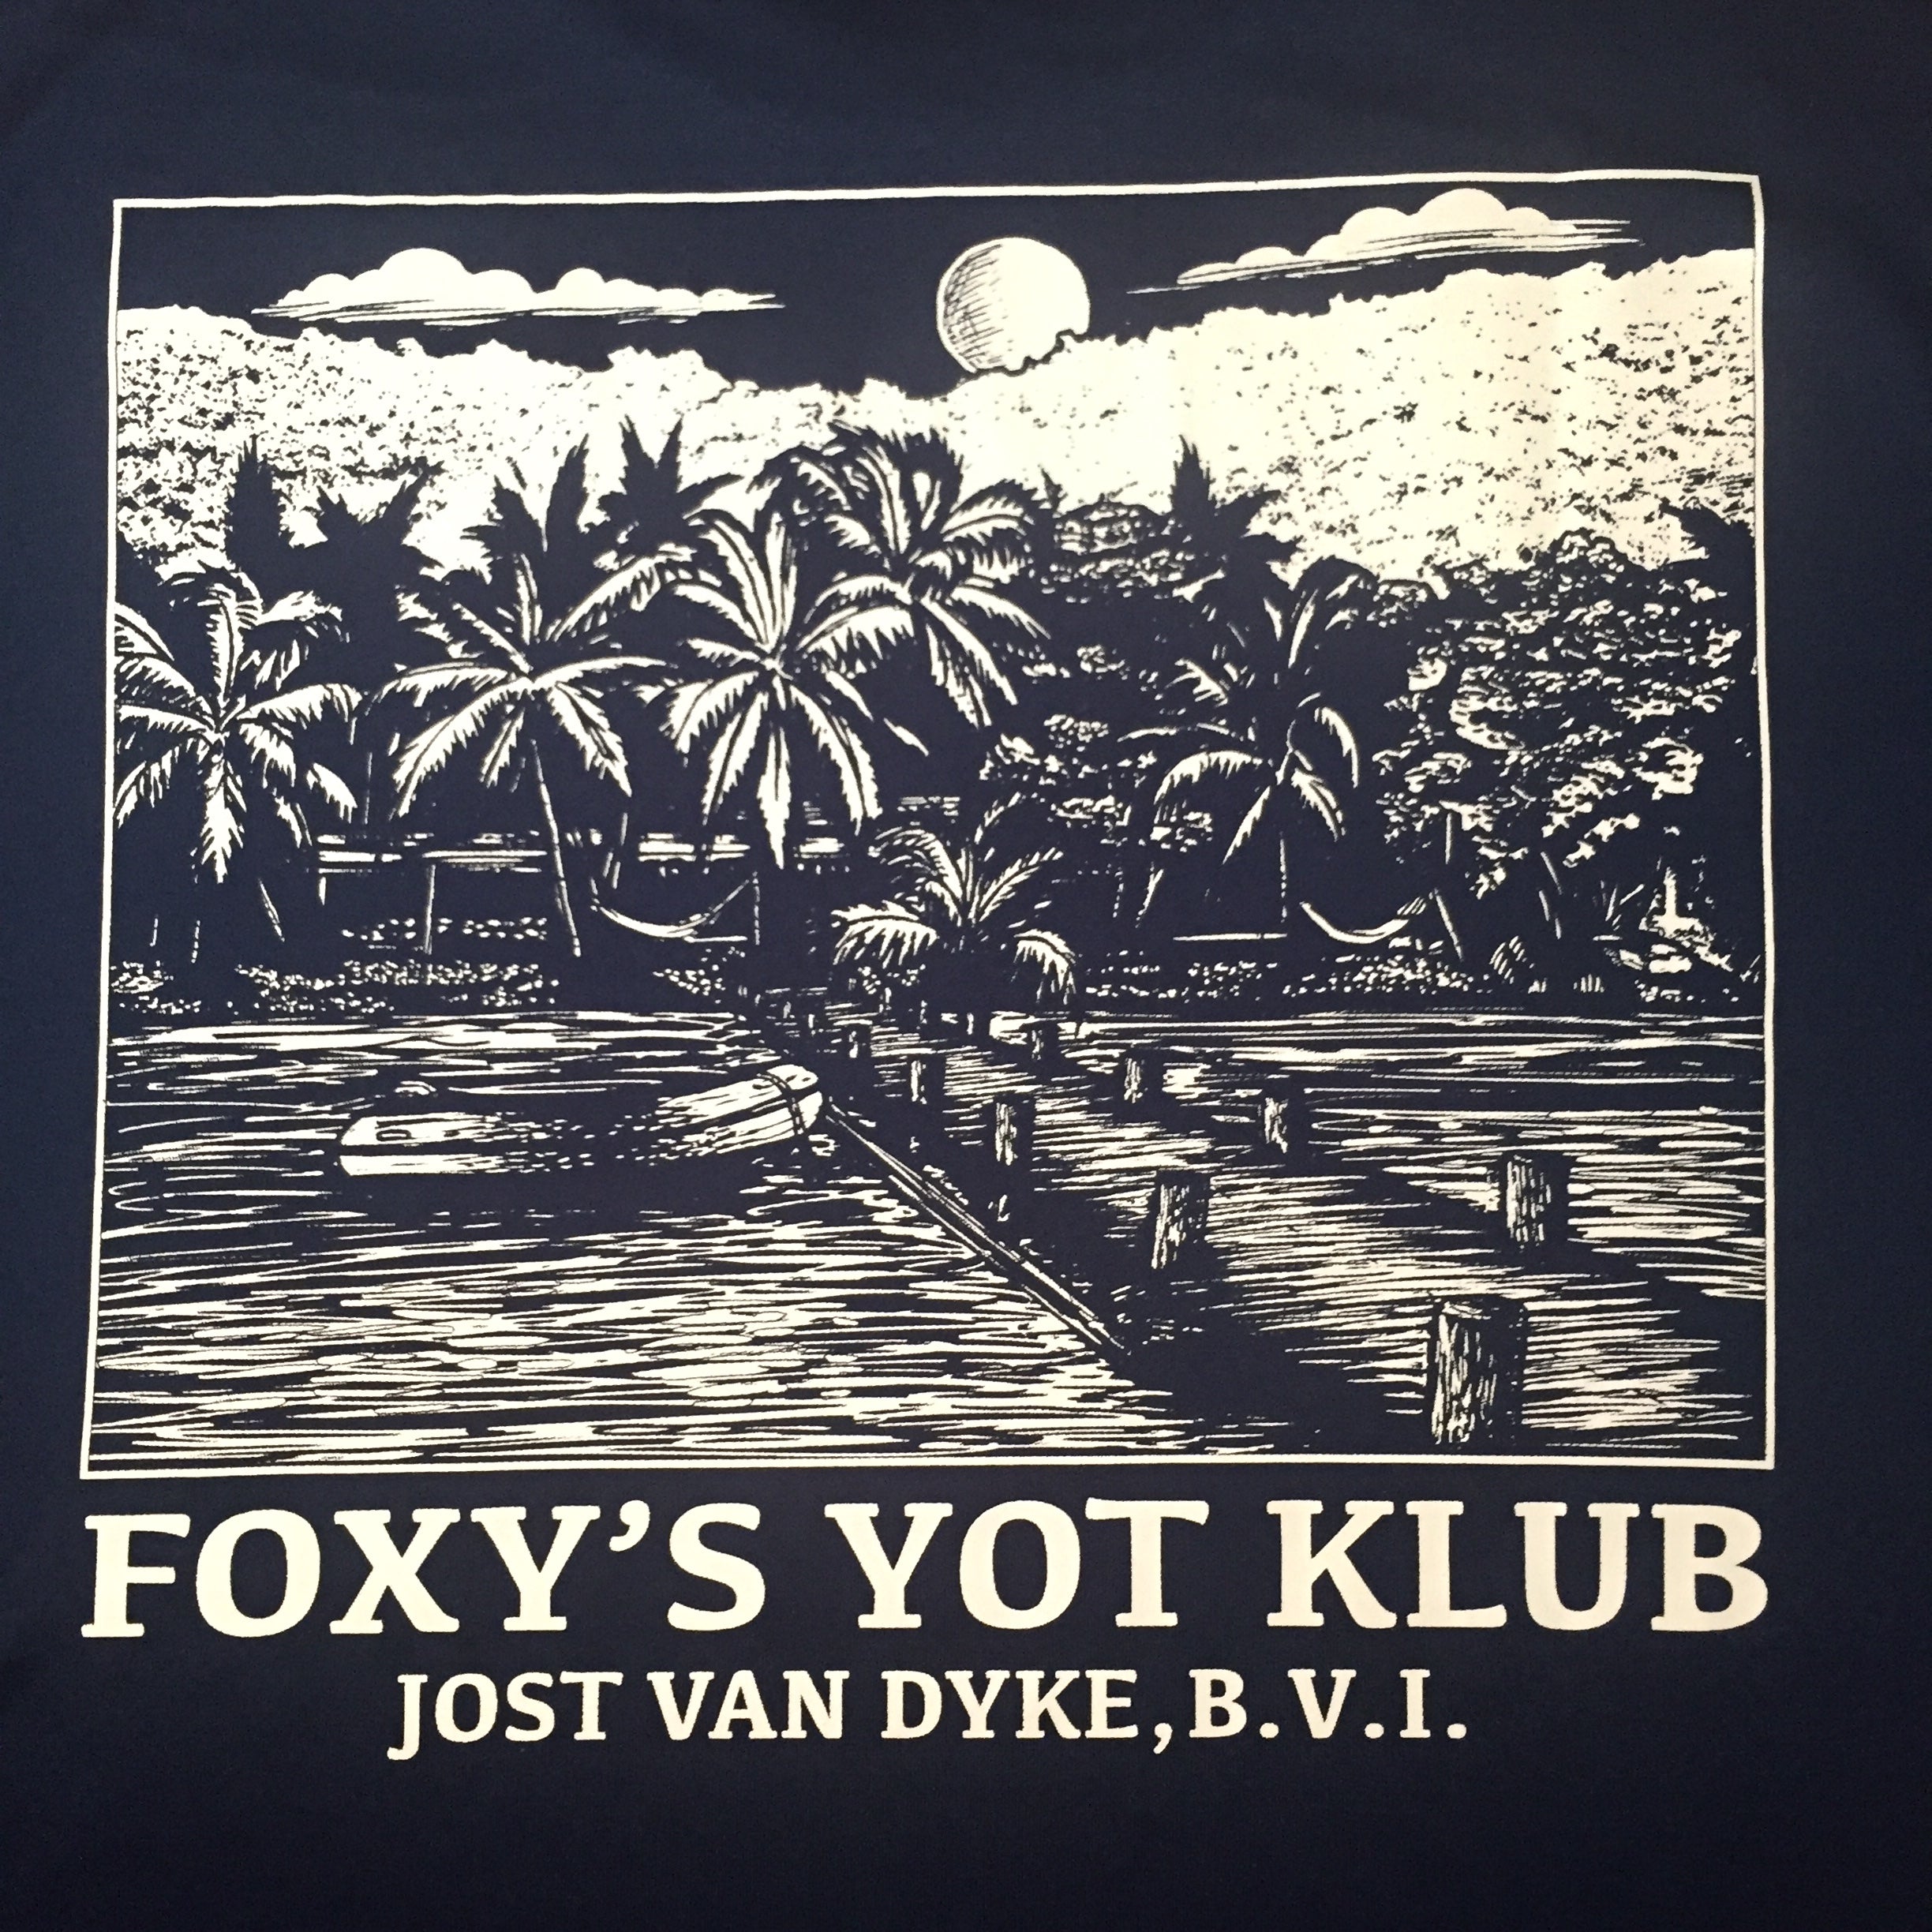 Foxy's 'Yot Klub' Long Sleeve Performance Tee